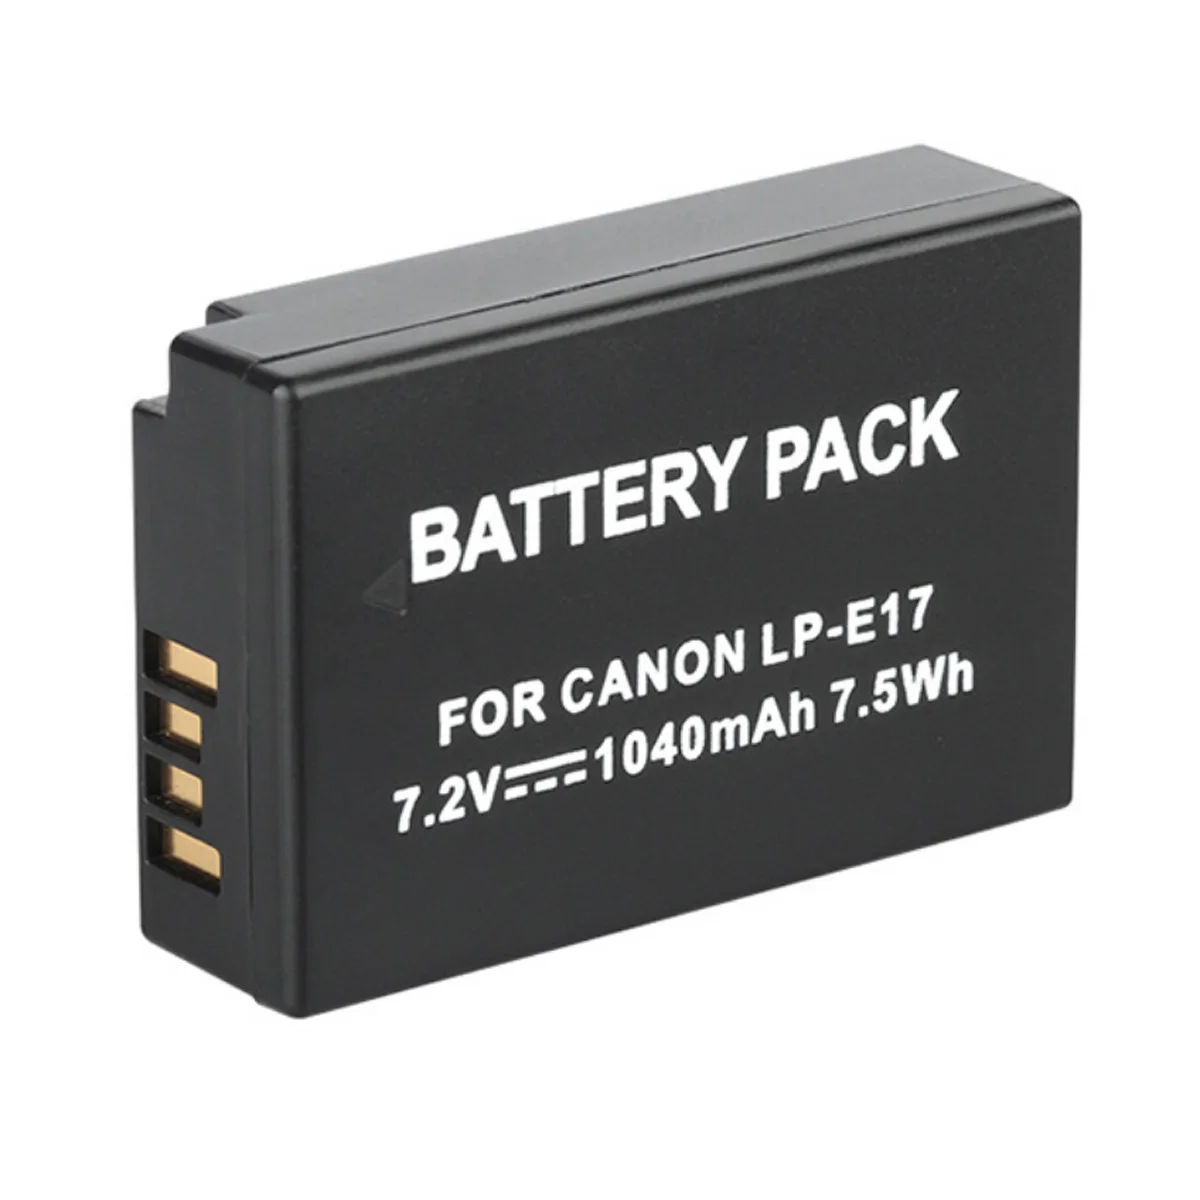 Батарея(2 шт)+ USB зарядное устройство для Canon LP-E17, LP-E 17, LP E17, LPE17 литий-ионная аккумуляторная и цифровая зеркальная камера